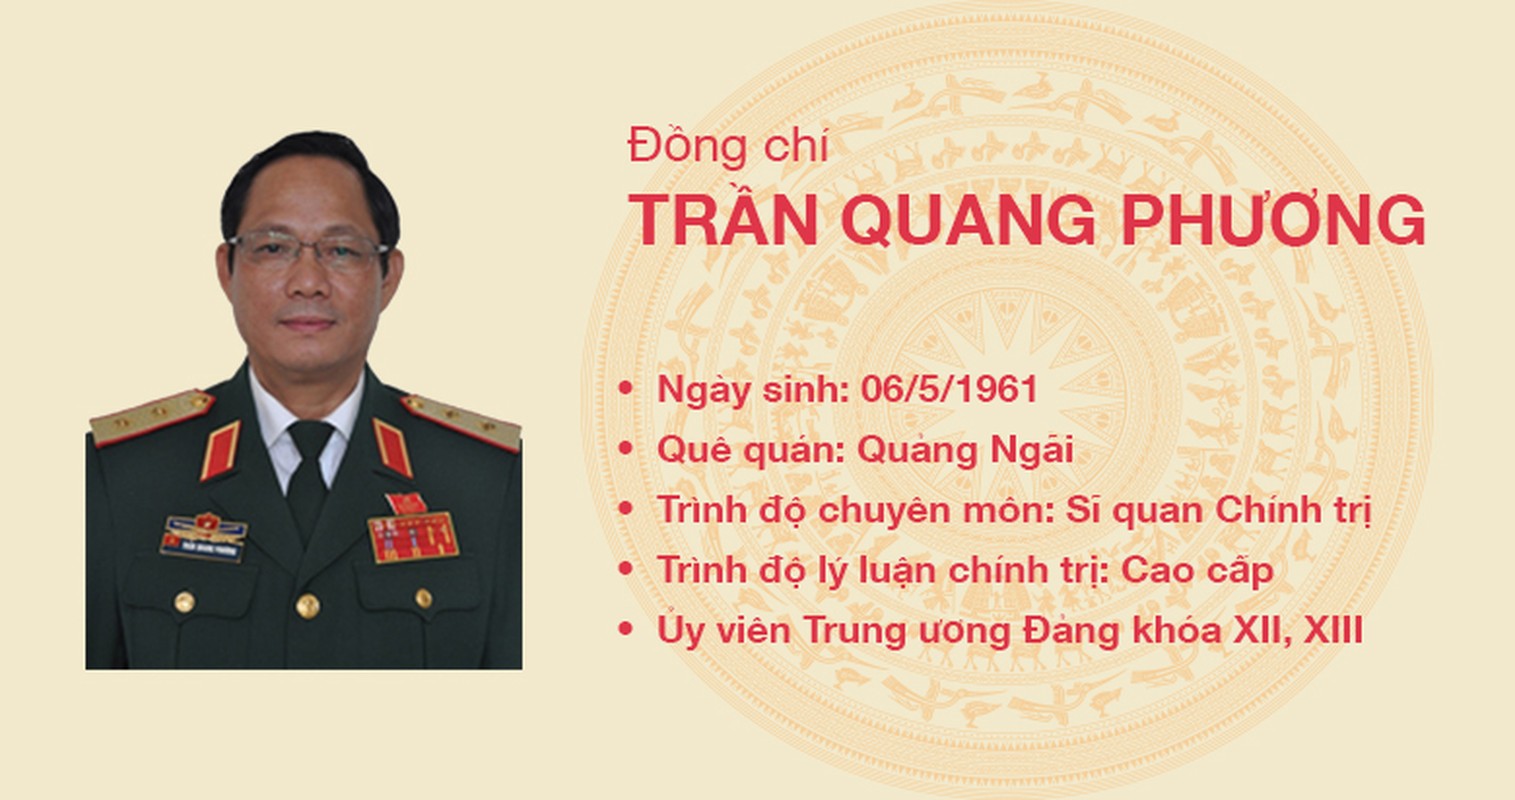 Chan dung Thuong tuong duoc gioi thieu bau lam Pho chu tich Quoc hoi-Hinh-6